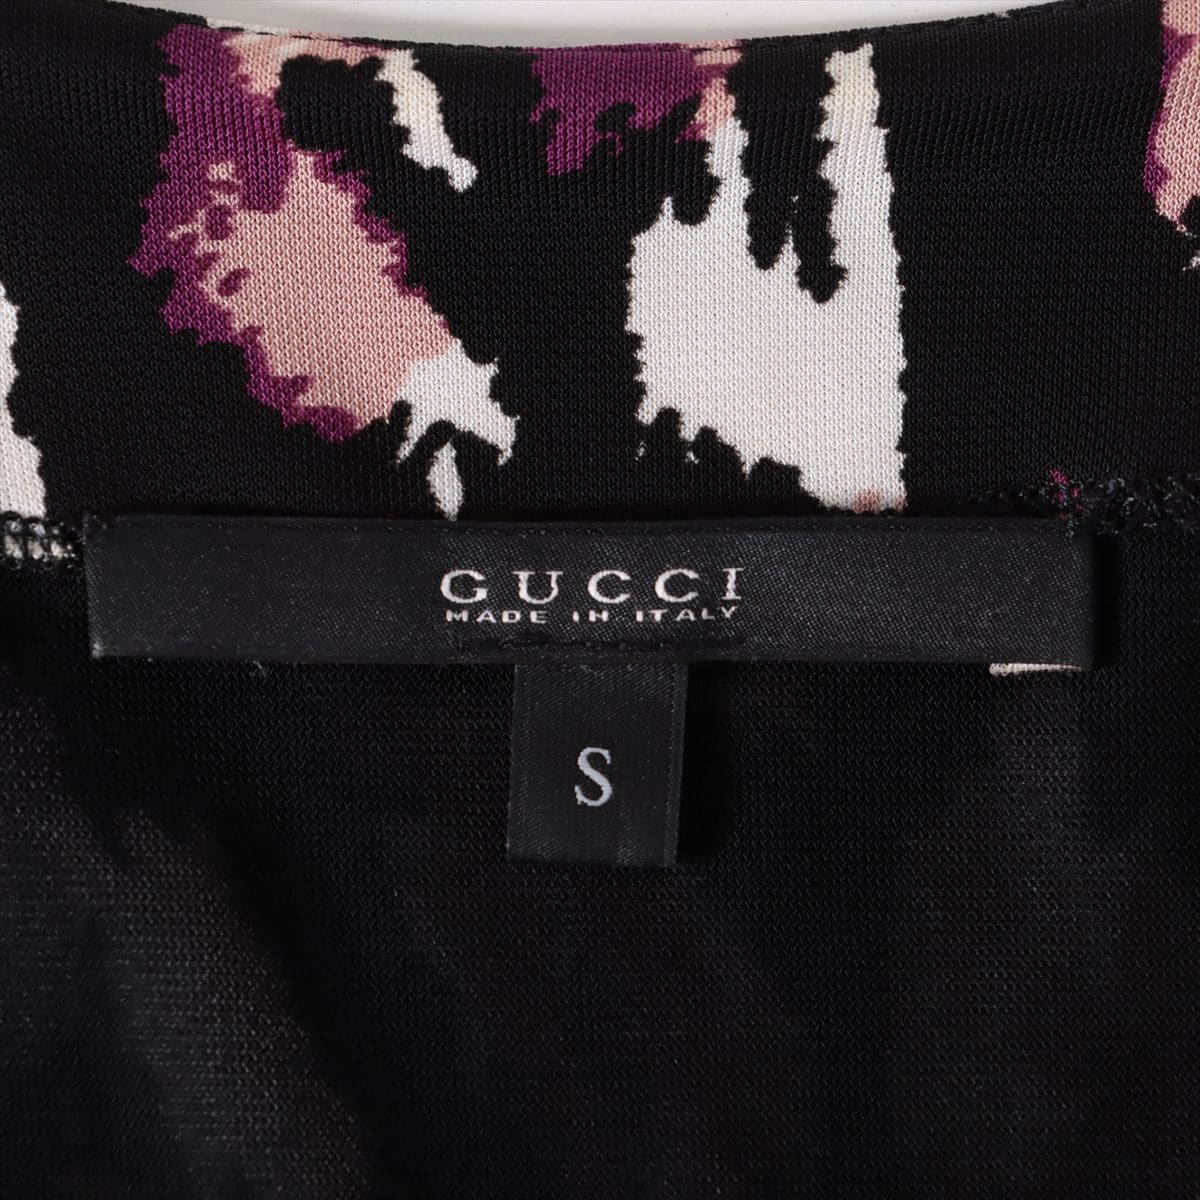 Gucci Rayon Dress S Ladies' Multicolor